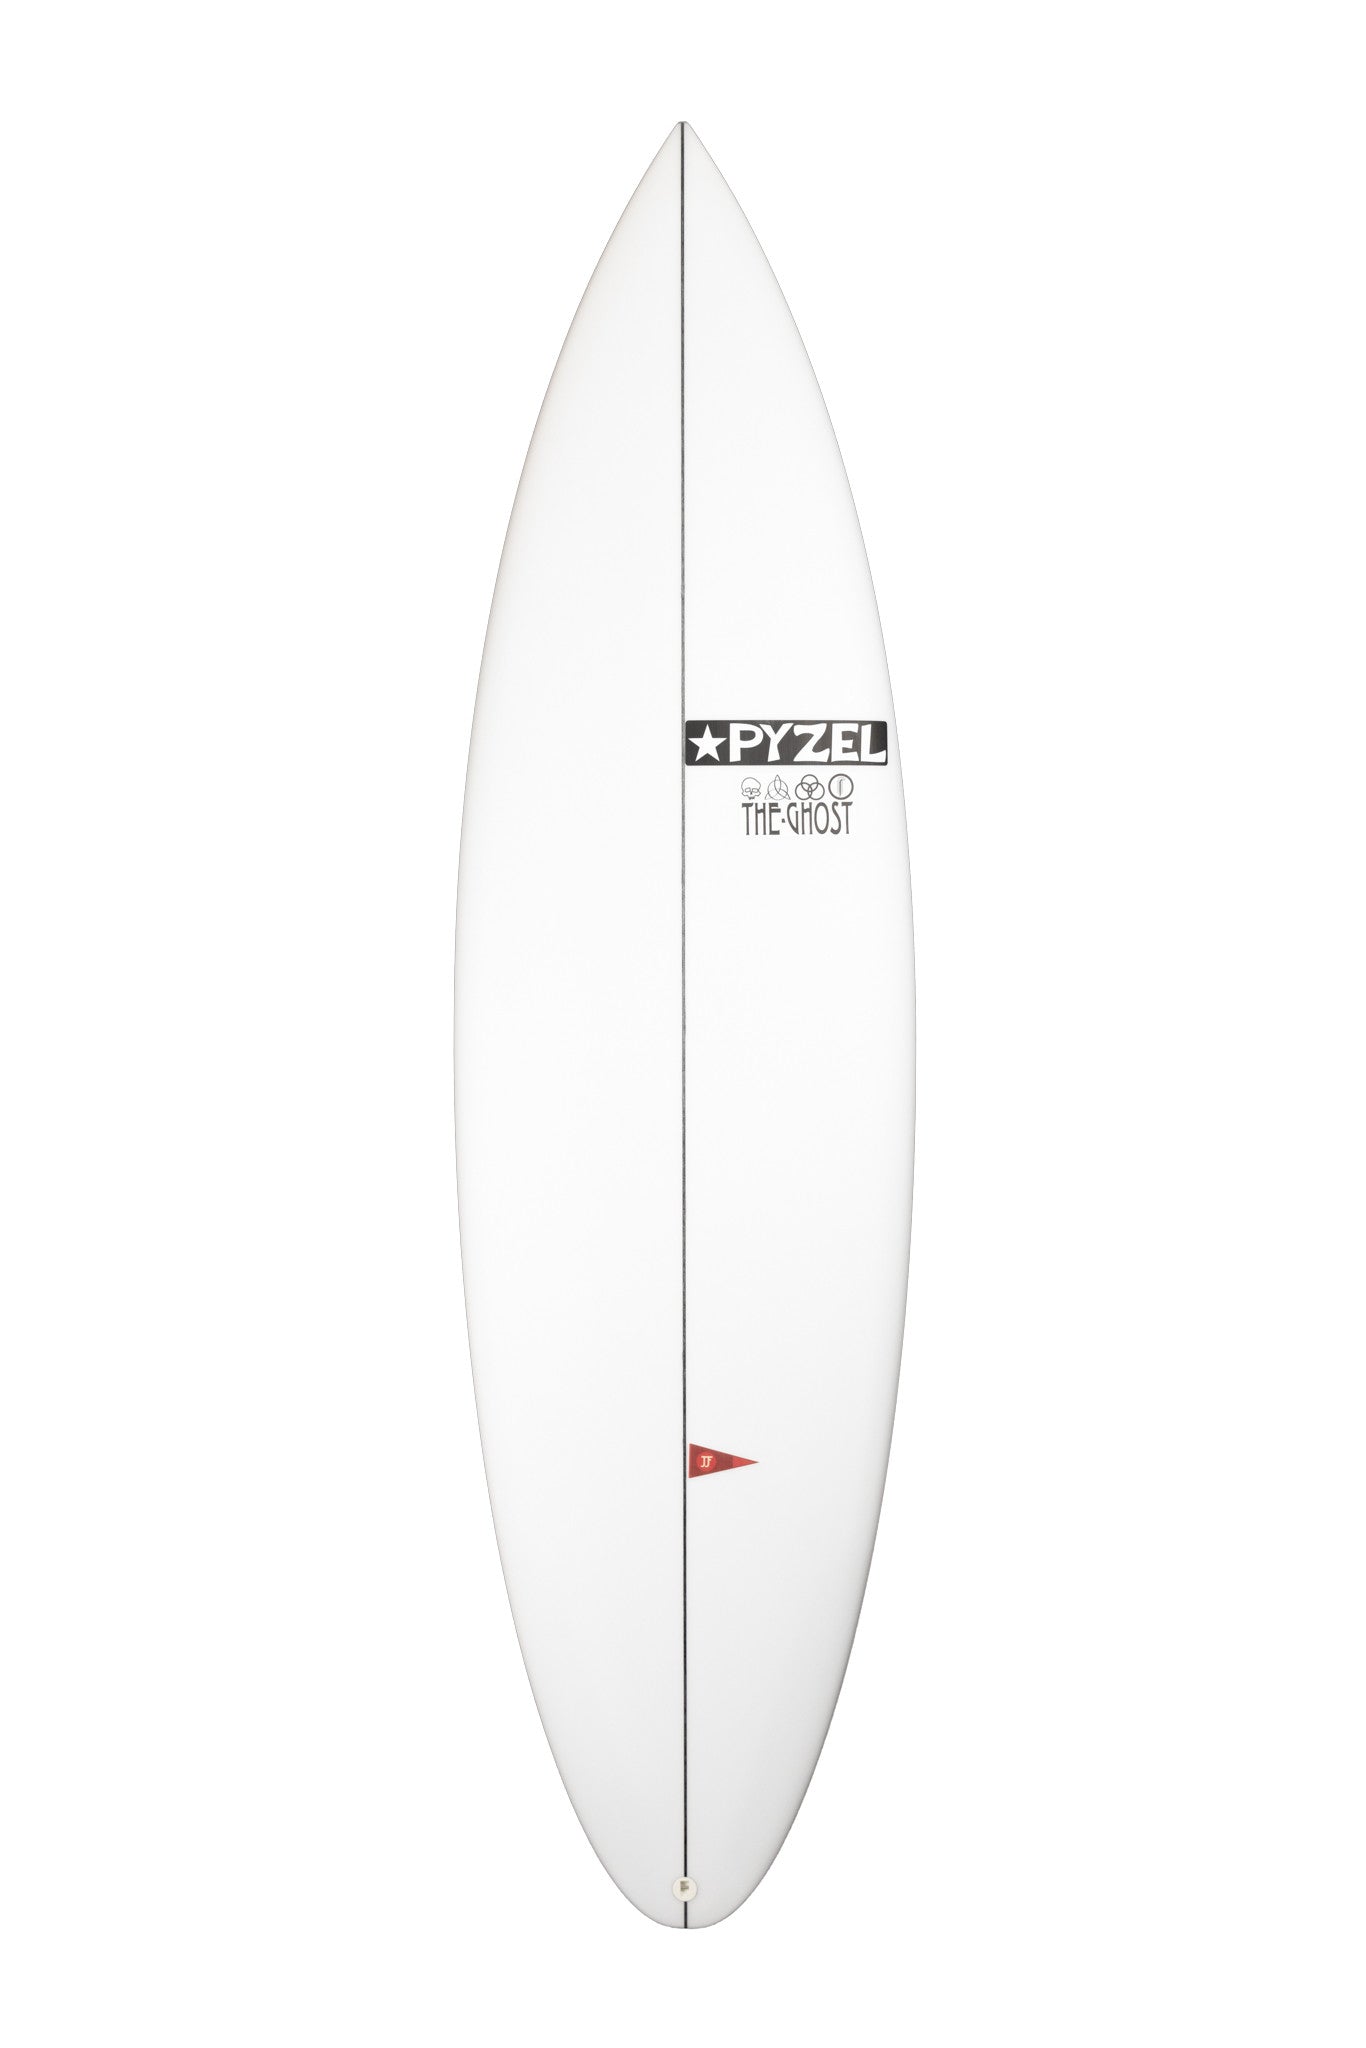 Pyzel Surfboards Ghost 5-Fin FCS2 6ft3in